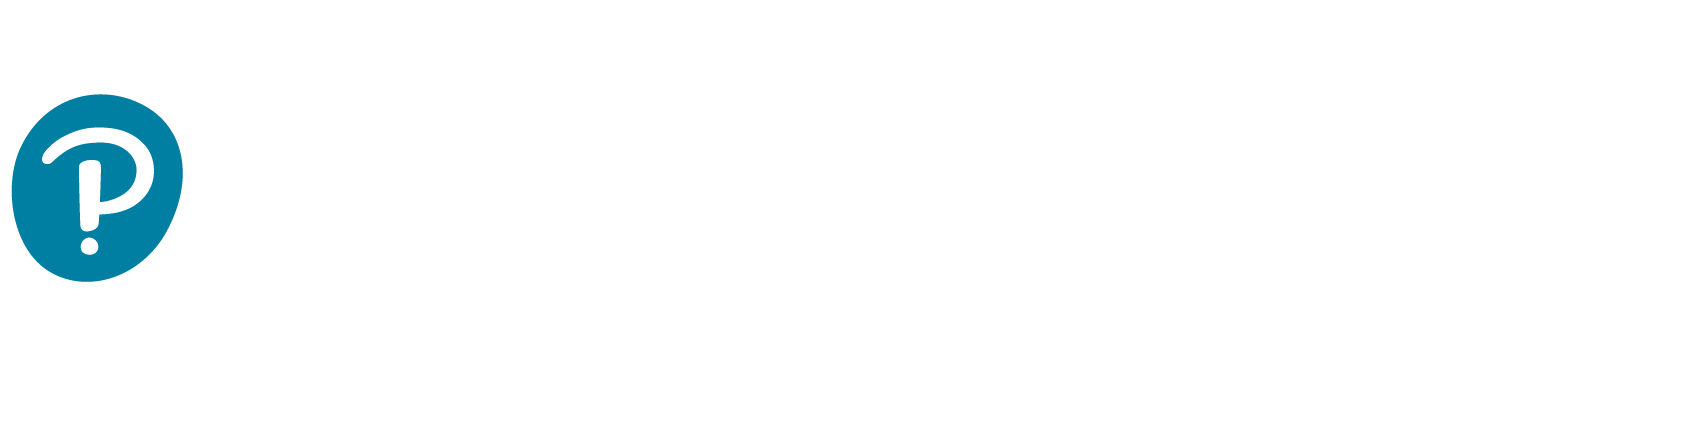 Pearson MyLab Engineering Logo